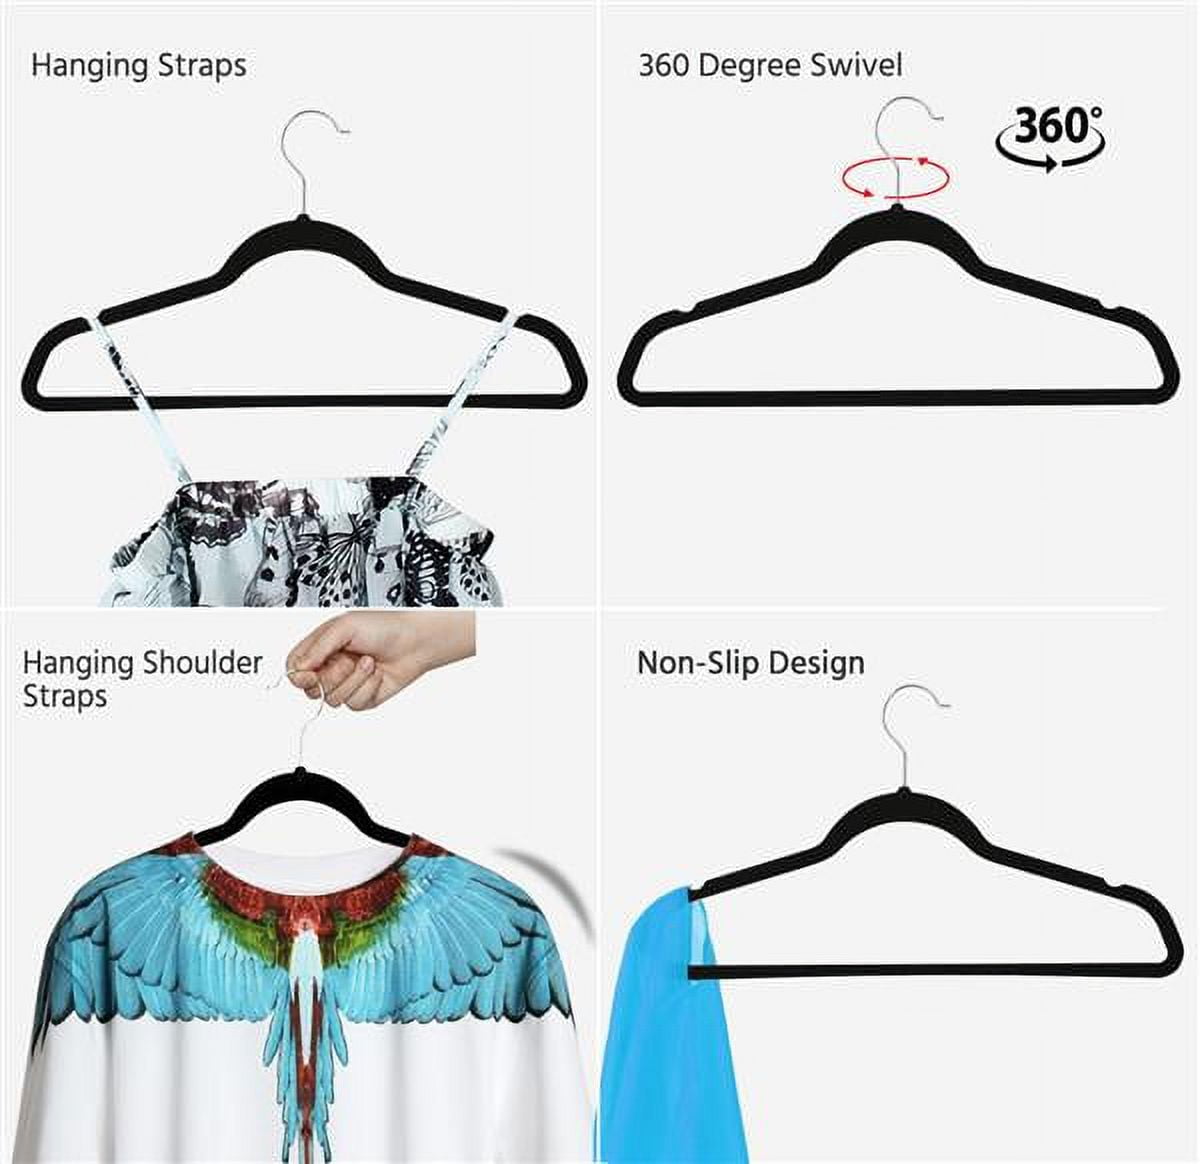 Yaheetech 100pcs Premium Quality Velvet Coat Hangers Hold Up to 11 Lbs,Beige